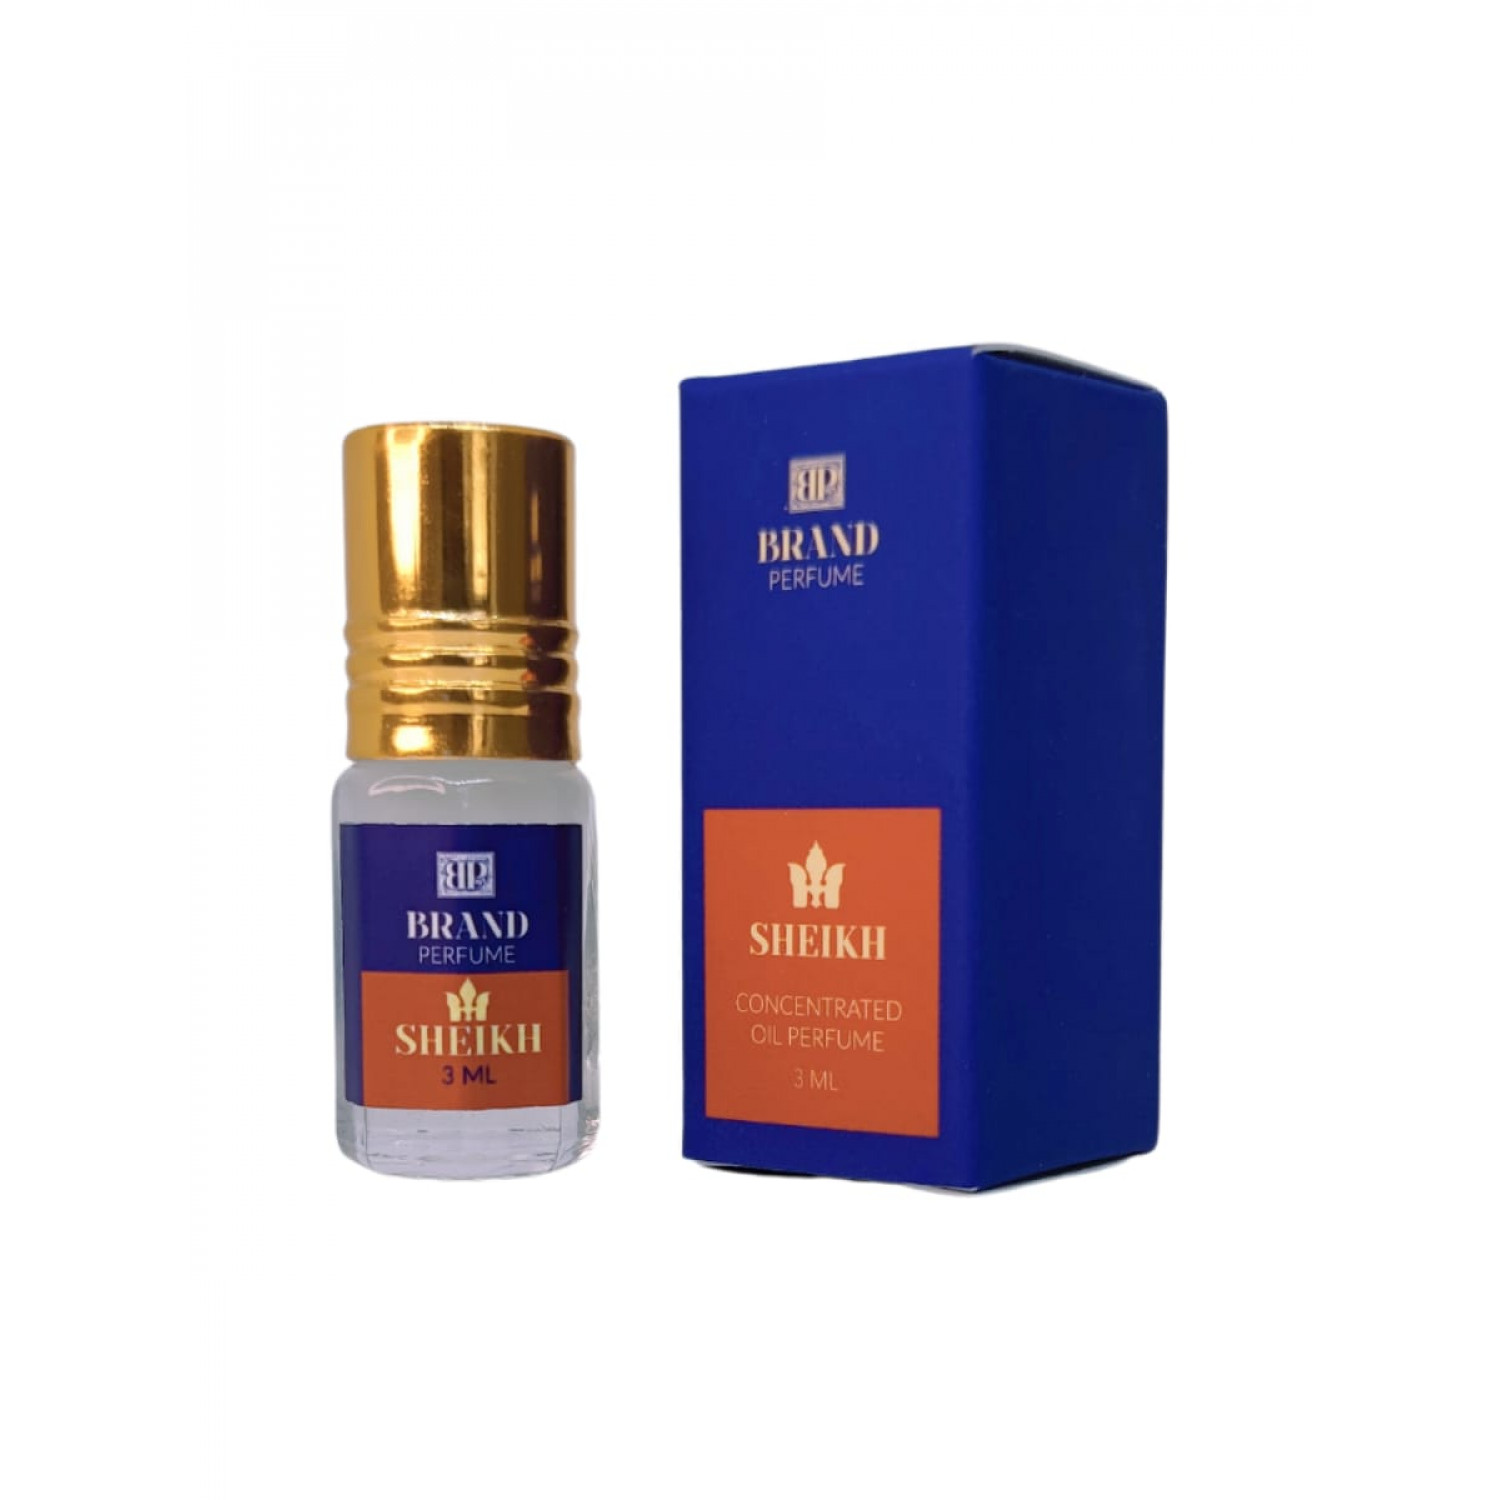 SHEIKH Concentrated Oil Perfume, Brand Perfume (ШЕЙХ Концентрированные масляные духи), ролик, 3 мл.